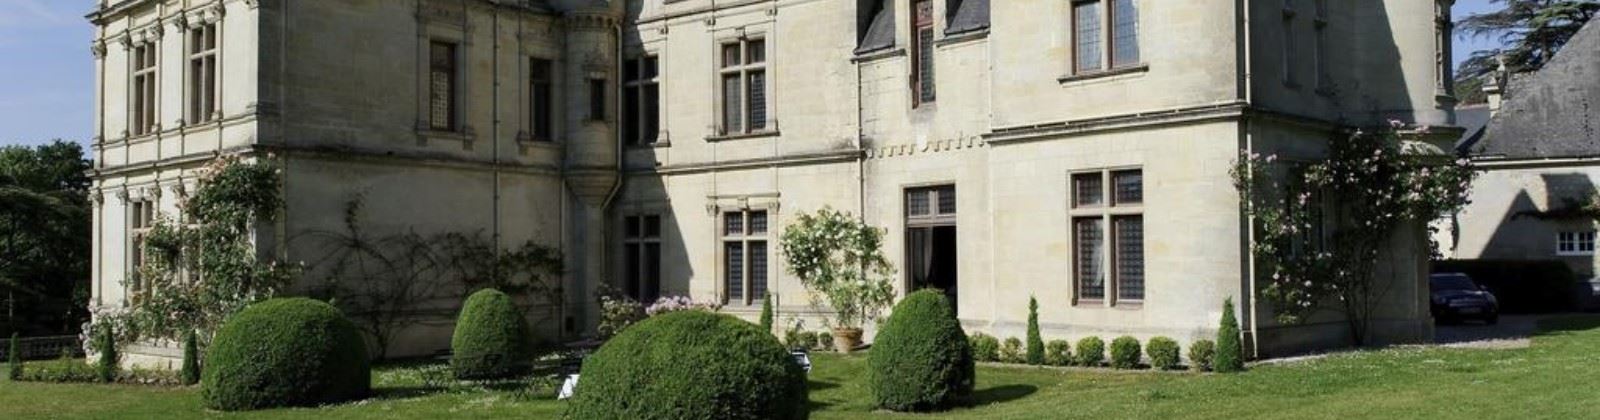 OLEVENE image - chateau-de-la-bourdaisiere-olevene-restaurant-hotel-booking-conference-meeting-